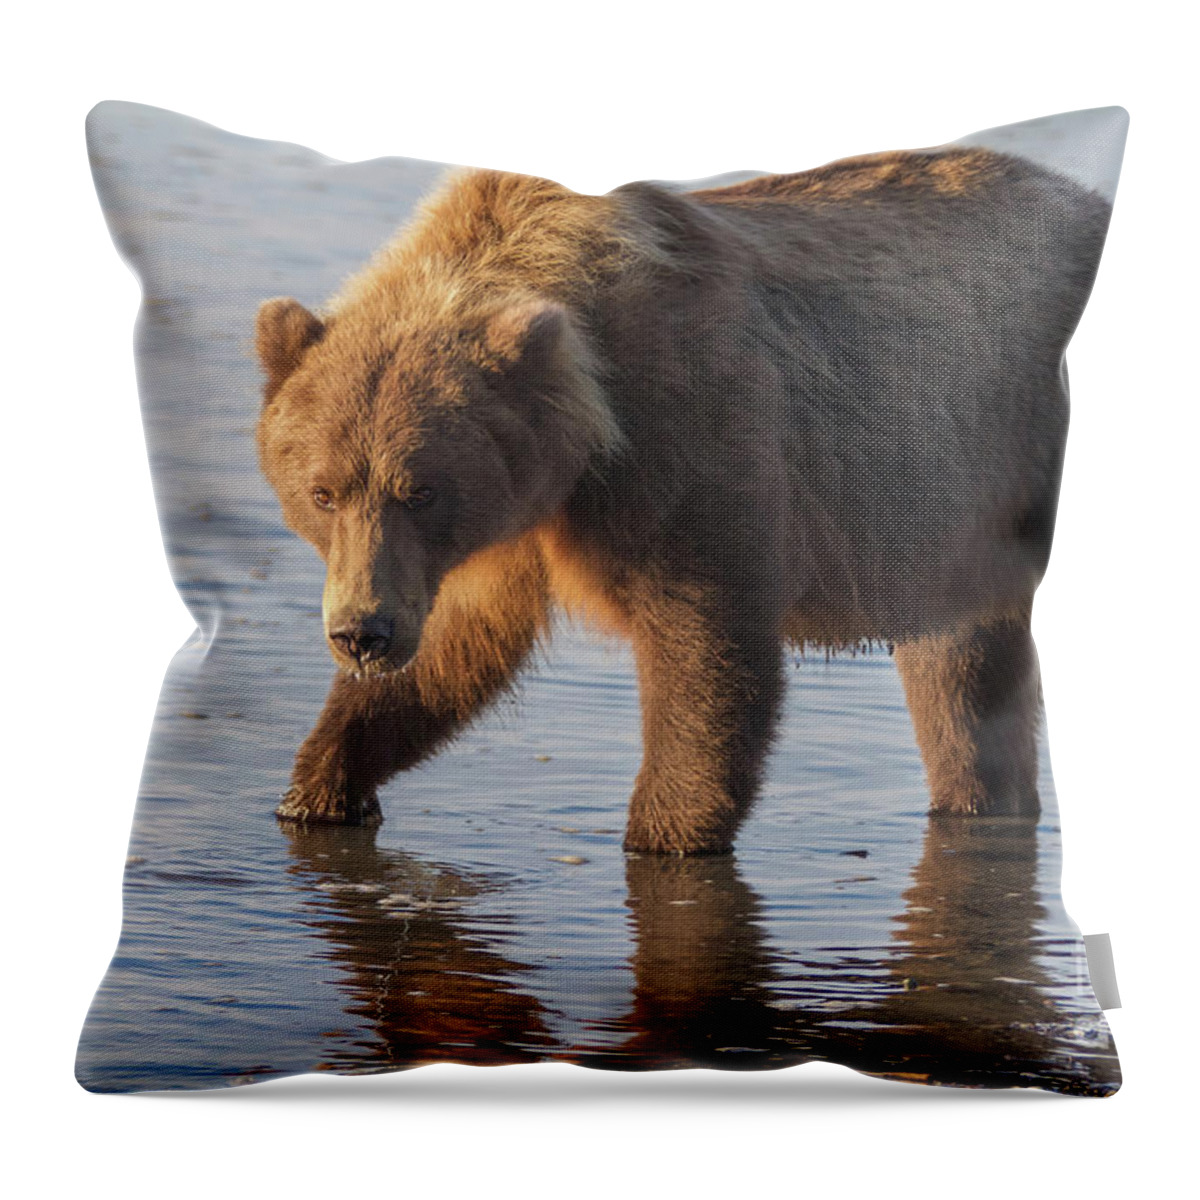 Alaska Throw Pillow featuring the photograph Sunshine Bear by Chris Scroggins